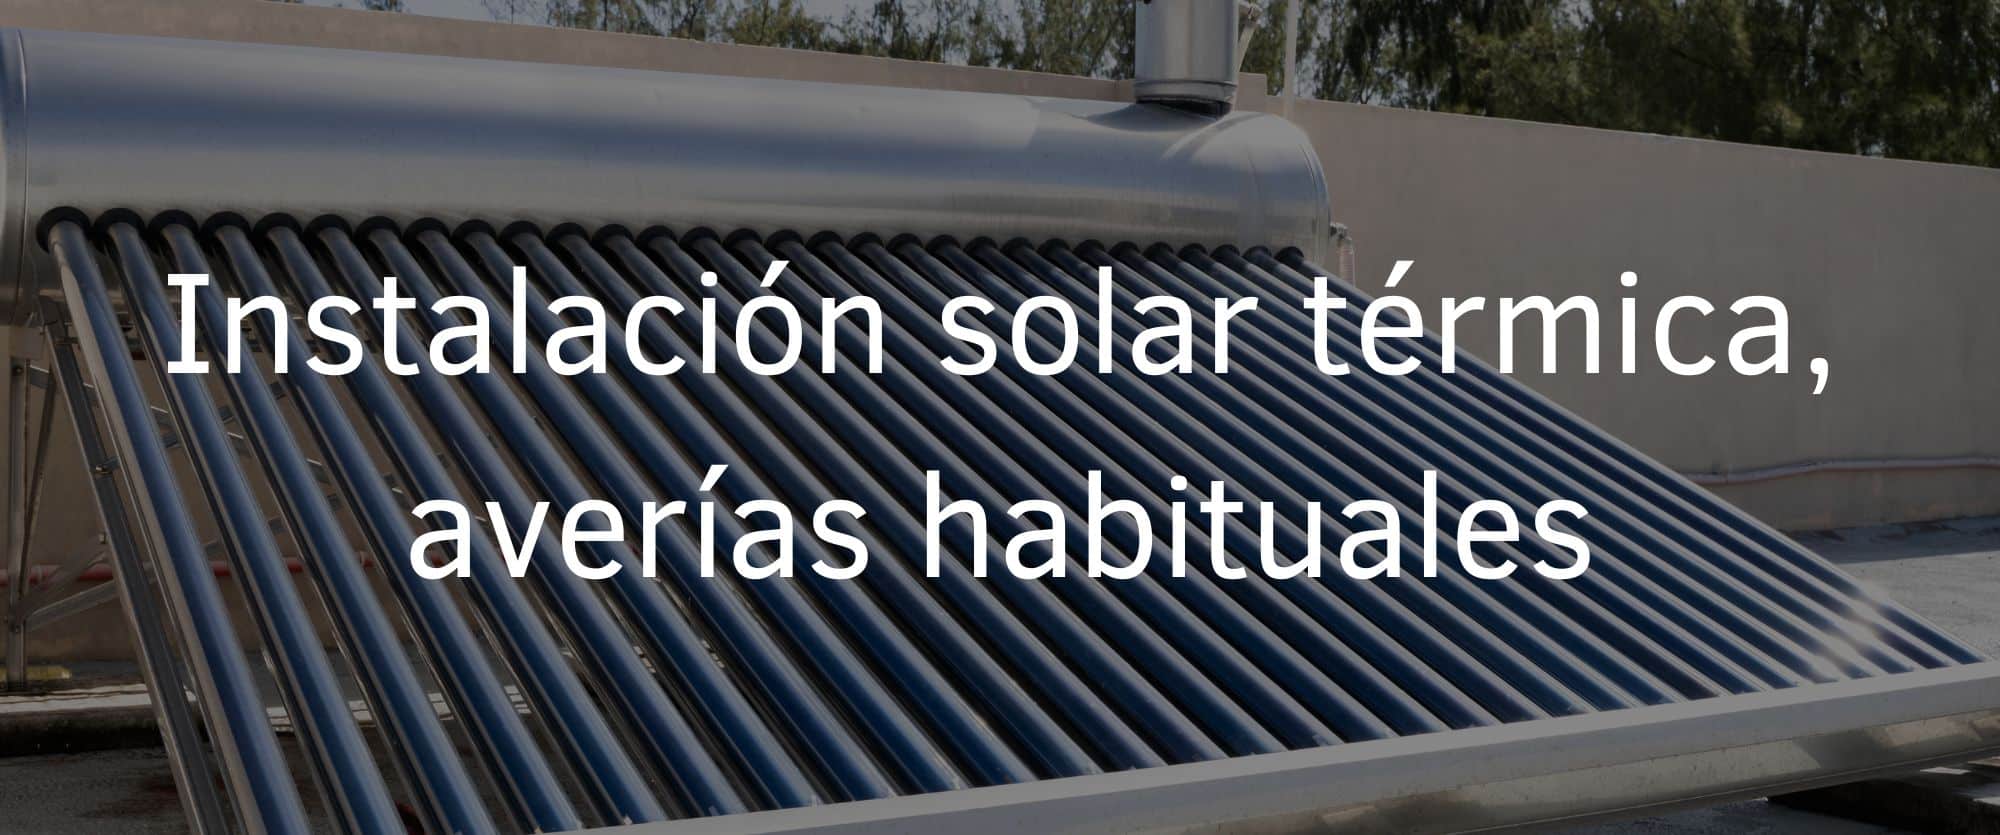 Instalación solar térmica, averías habituales